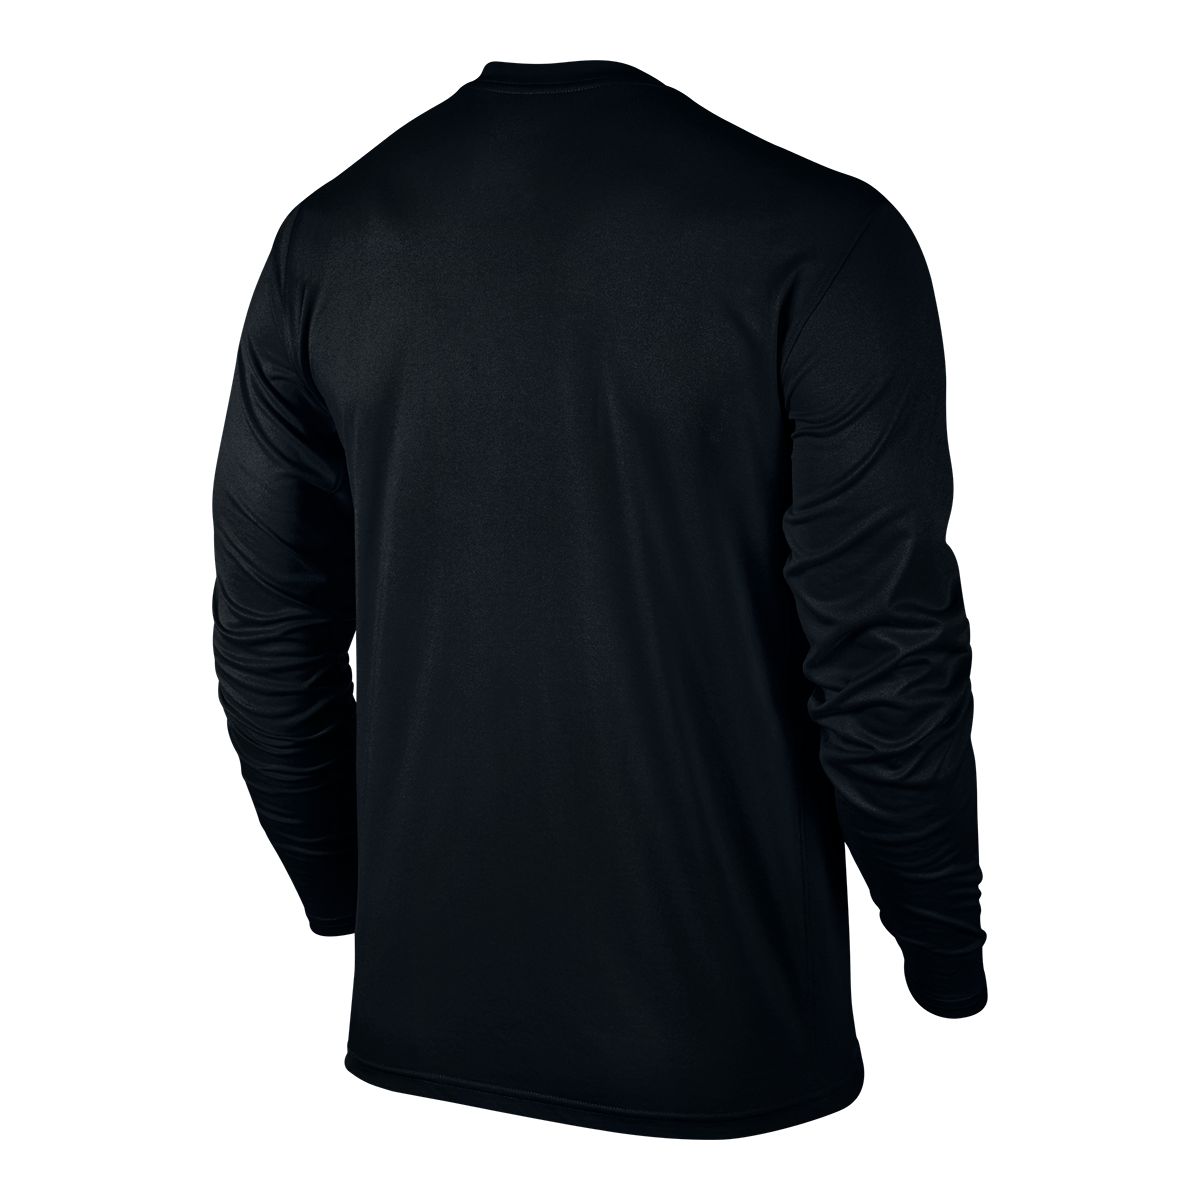 Nike Mens Core Legend 2.0 Long Sleeve Top, Black, Size Medium